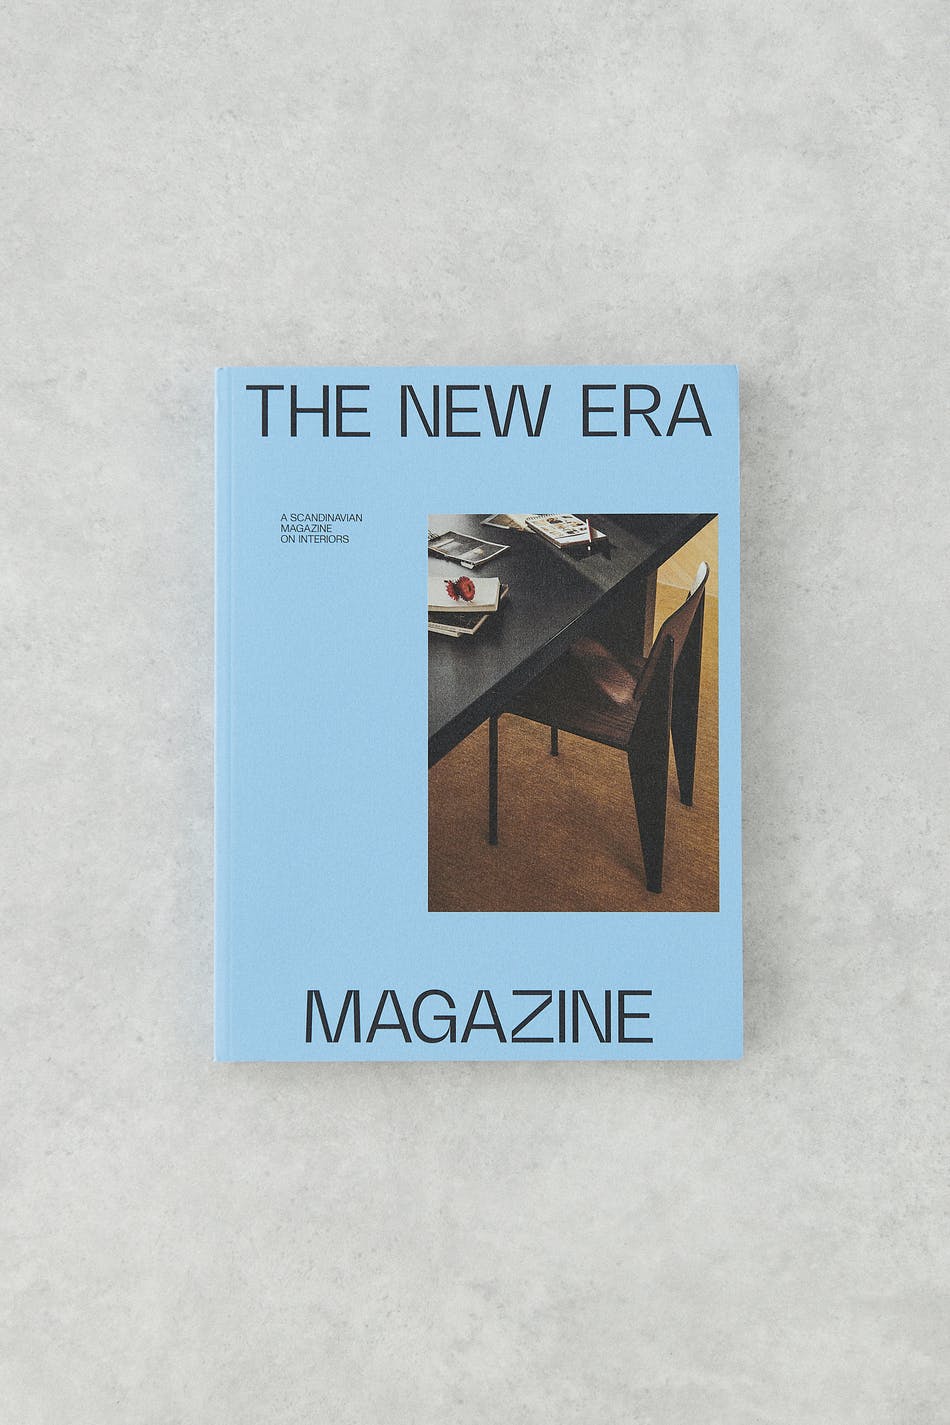 New mags The New Era magazine